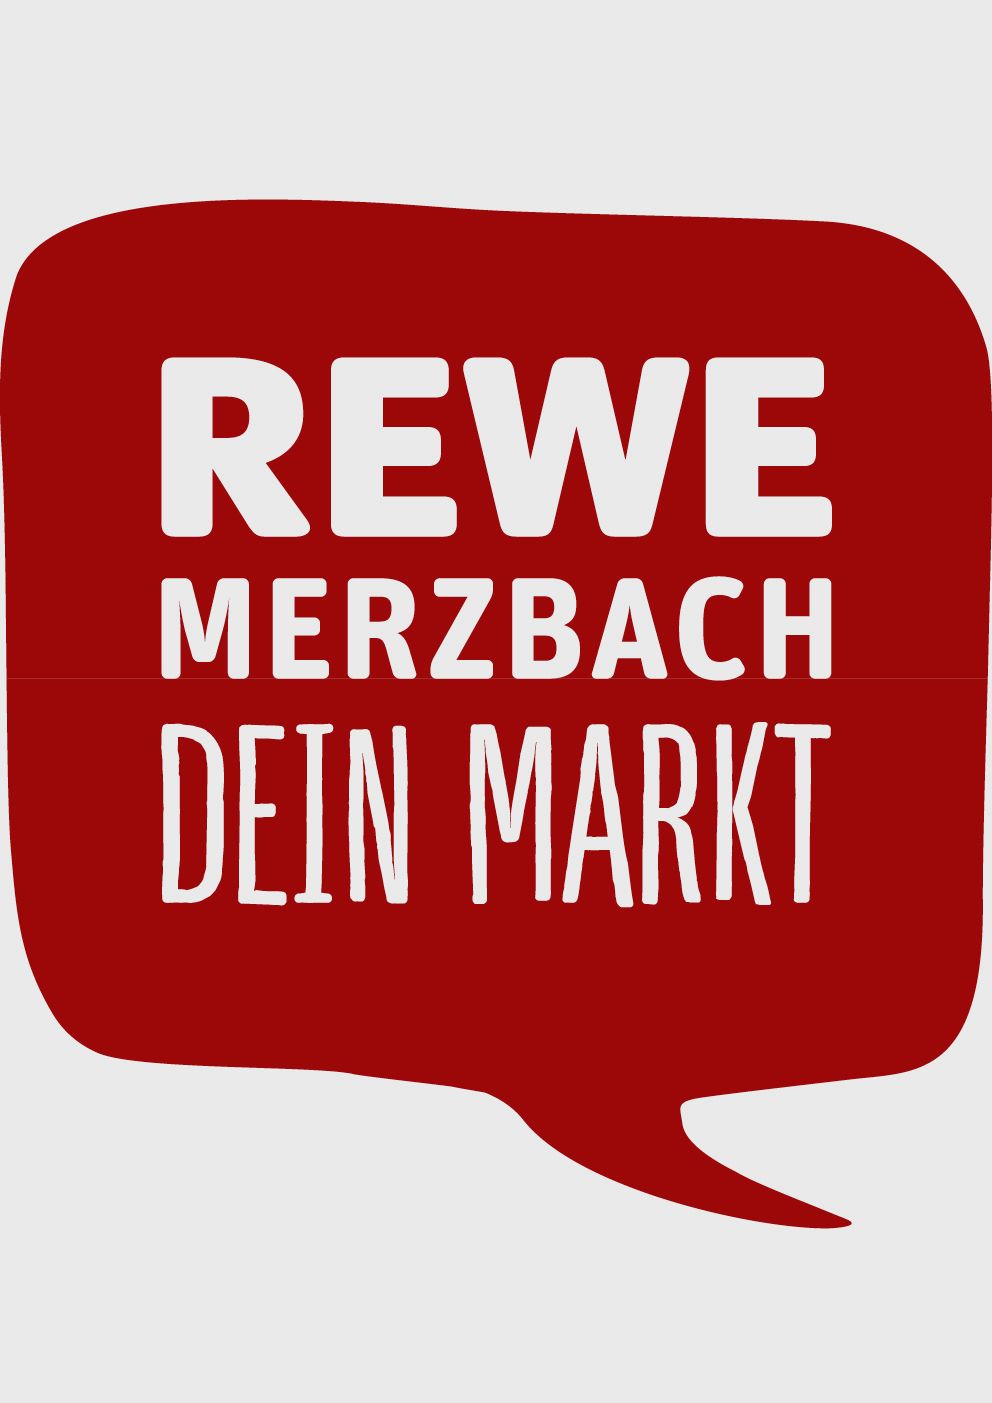 REWE Merzbach